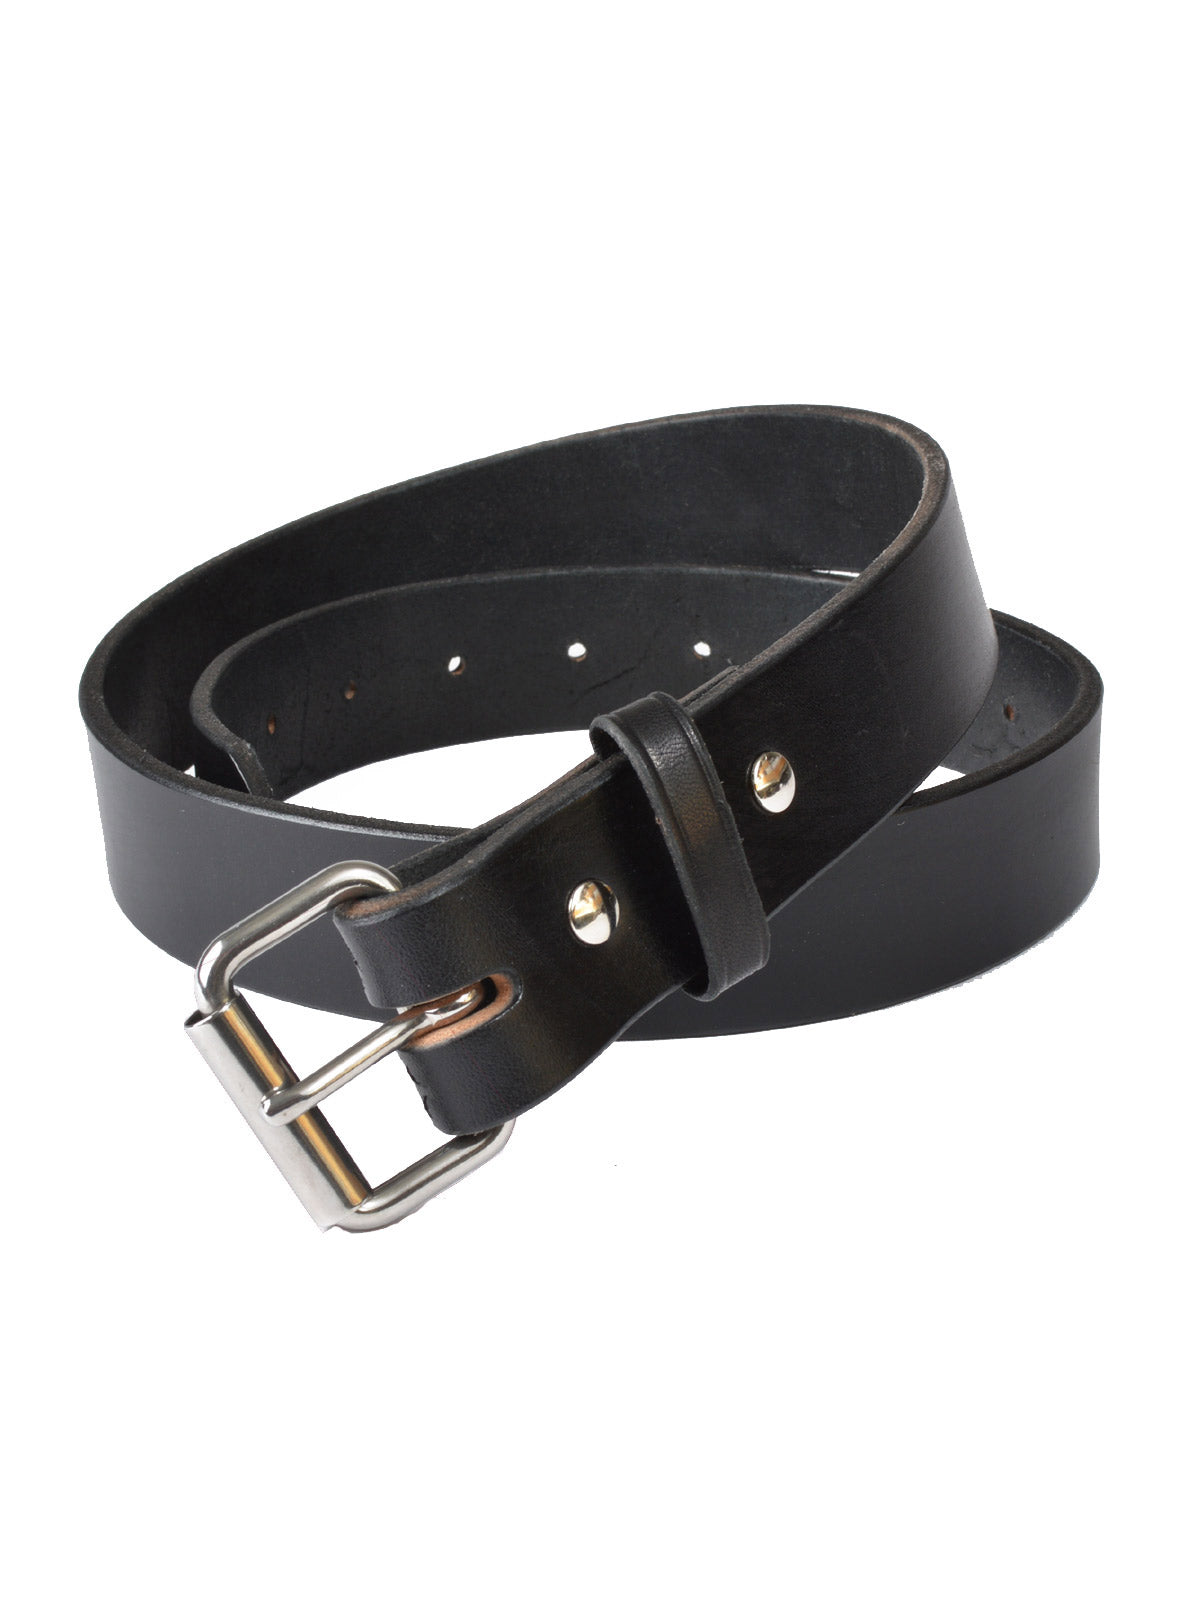 P&B Harness Full Grain Leather Belts in Black 305-R-BLK - Regular Sizes